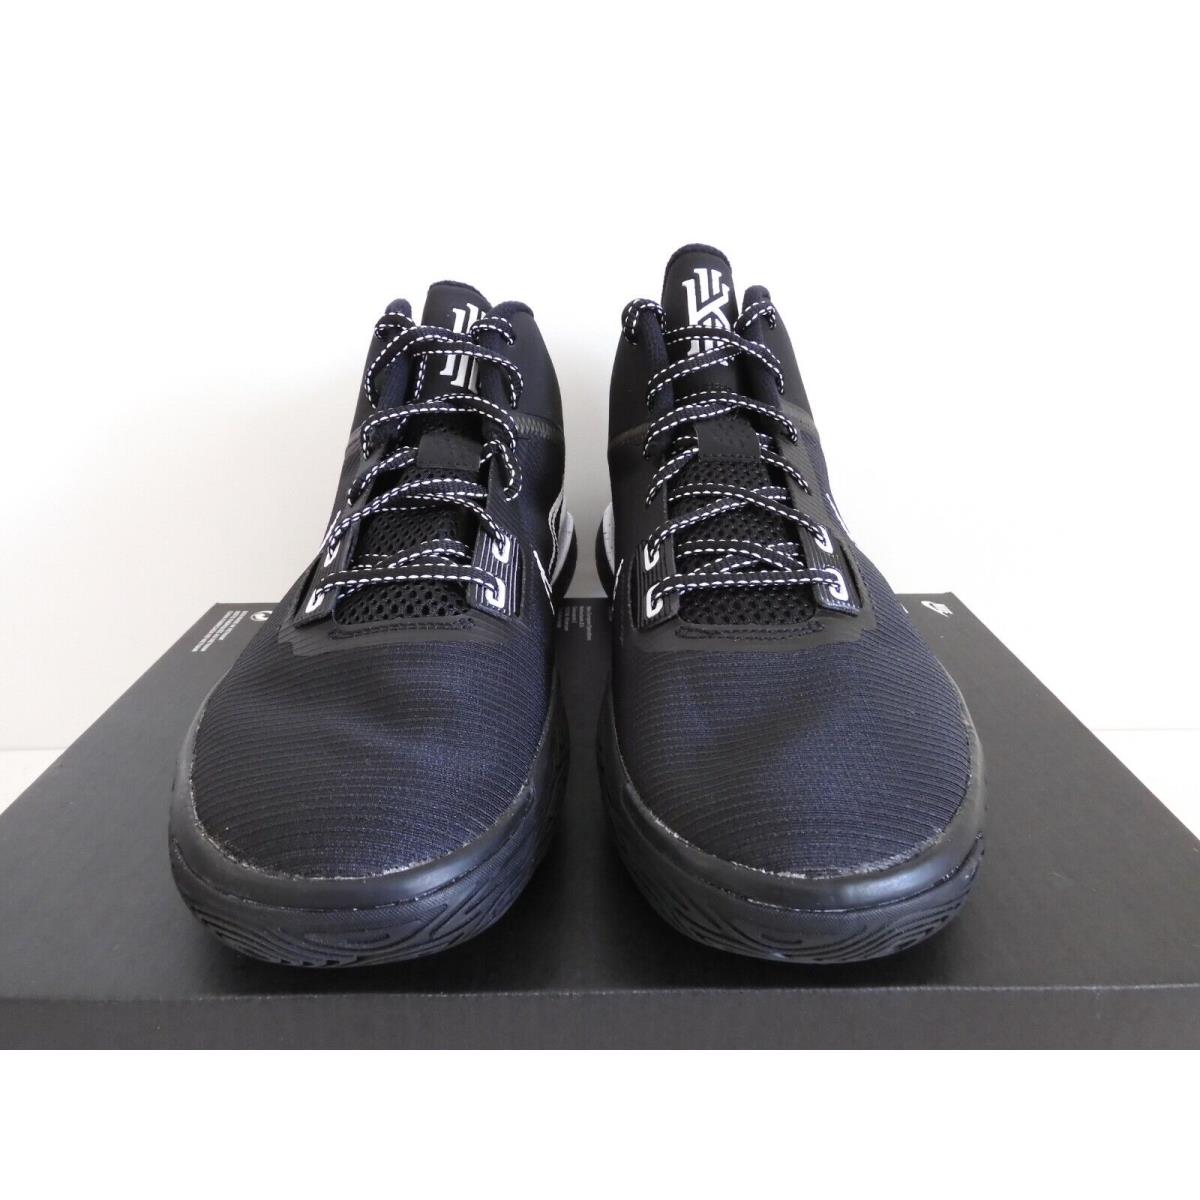 Nike shoes Kyrie Flytrap - Black 1